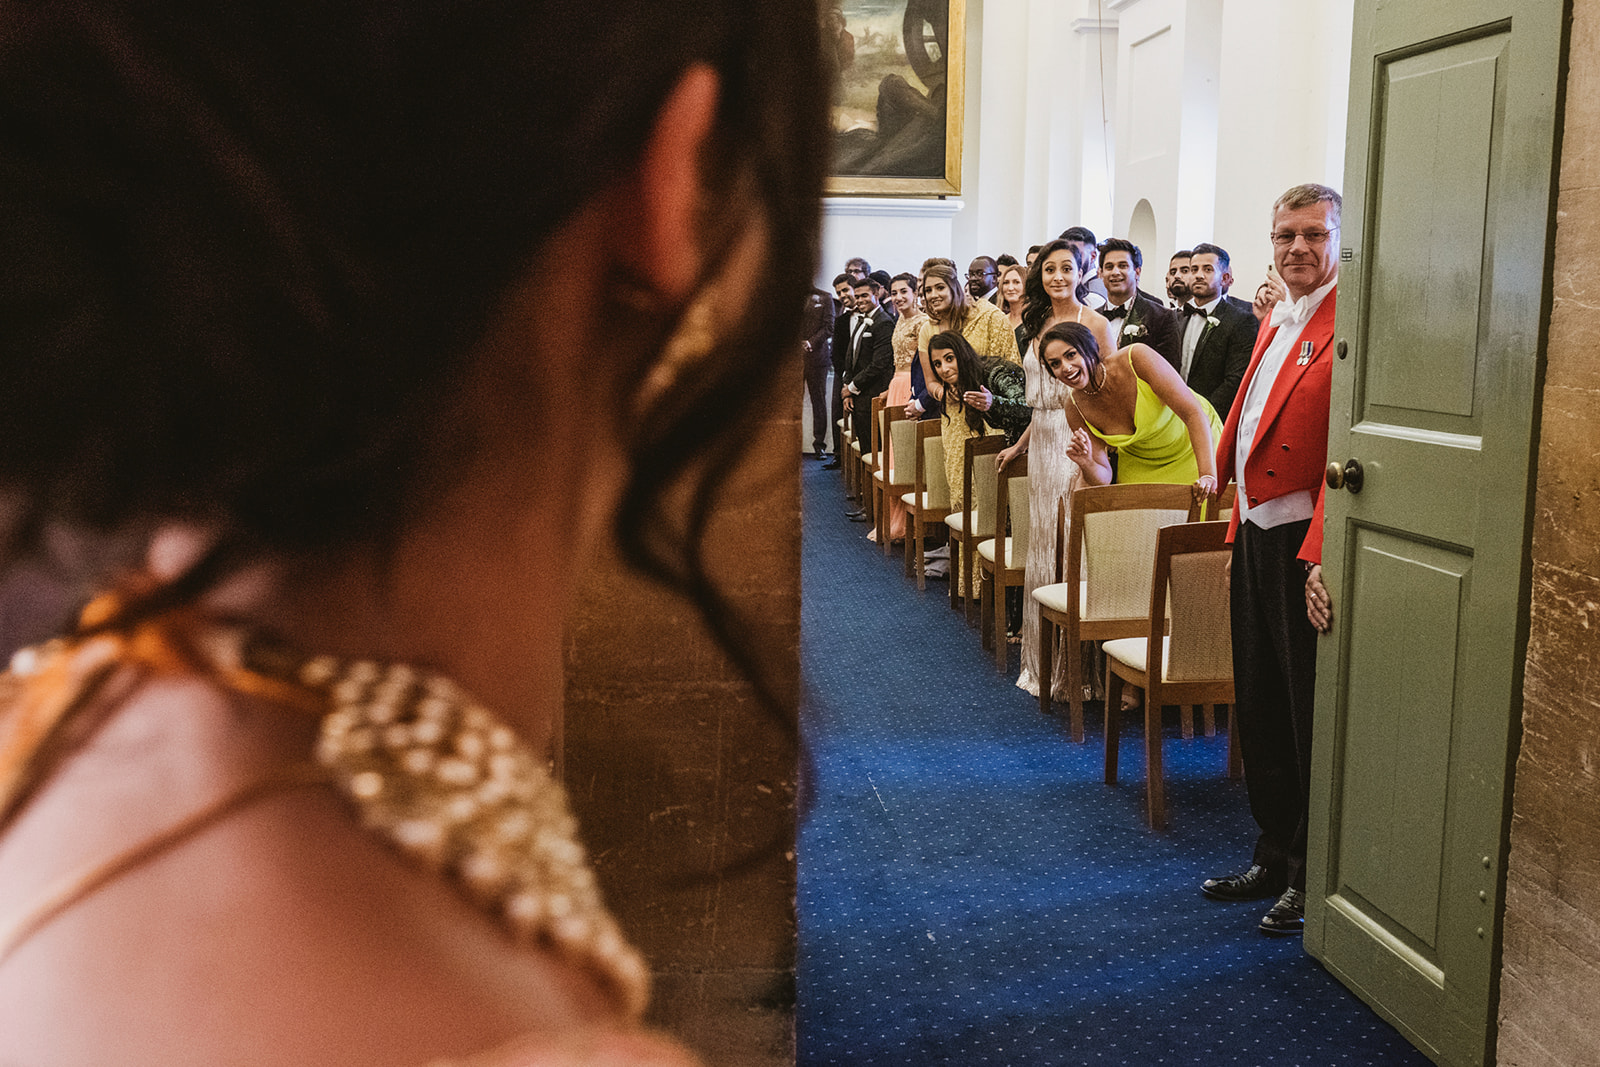 Blenheim Palace amazing documentary wedding photography by York Place Studios